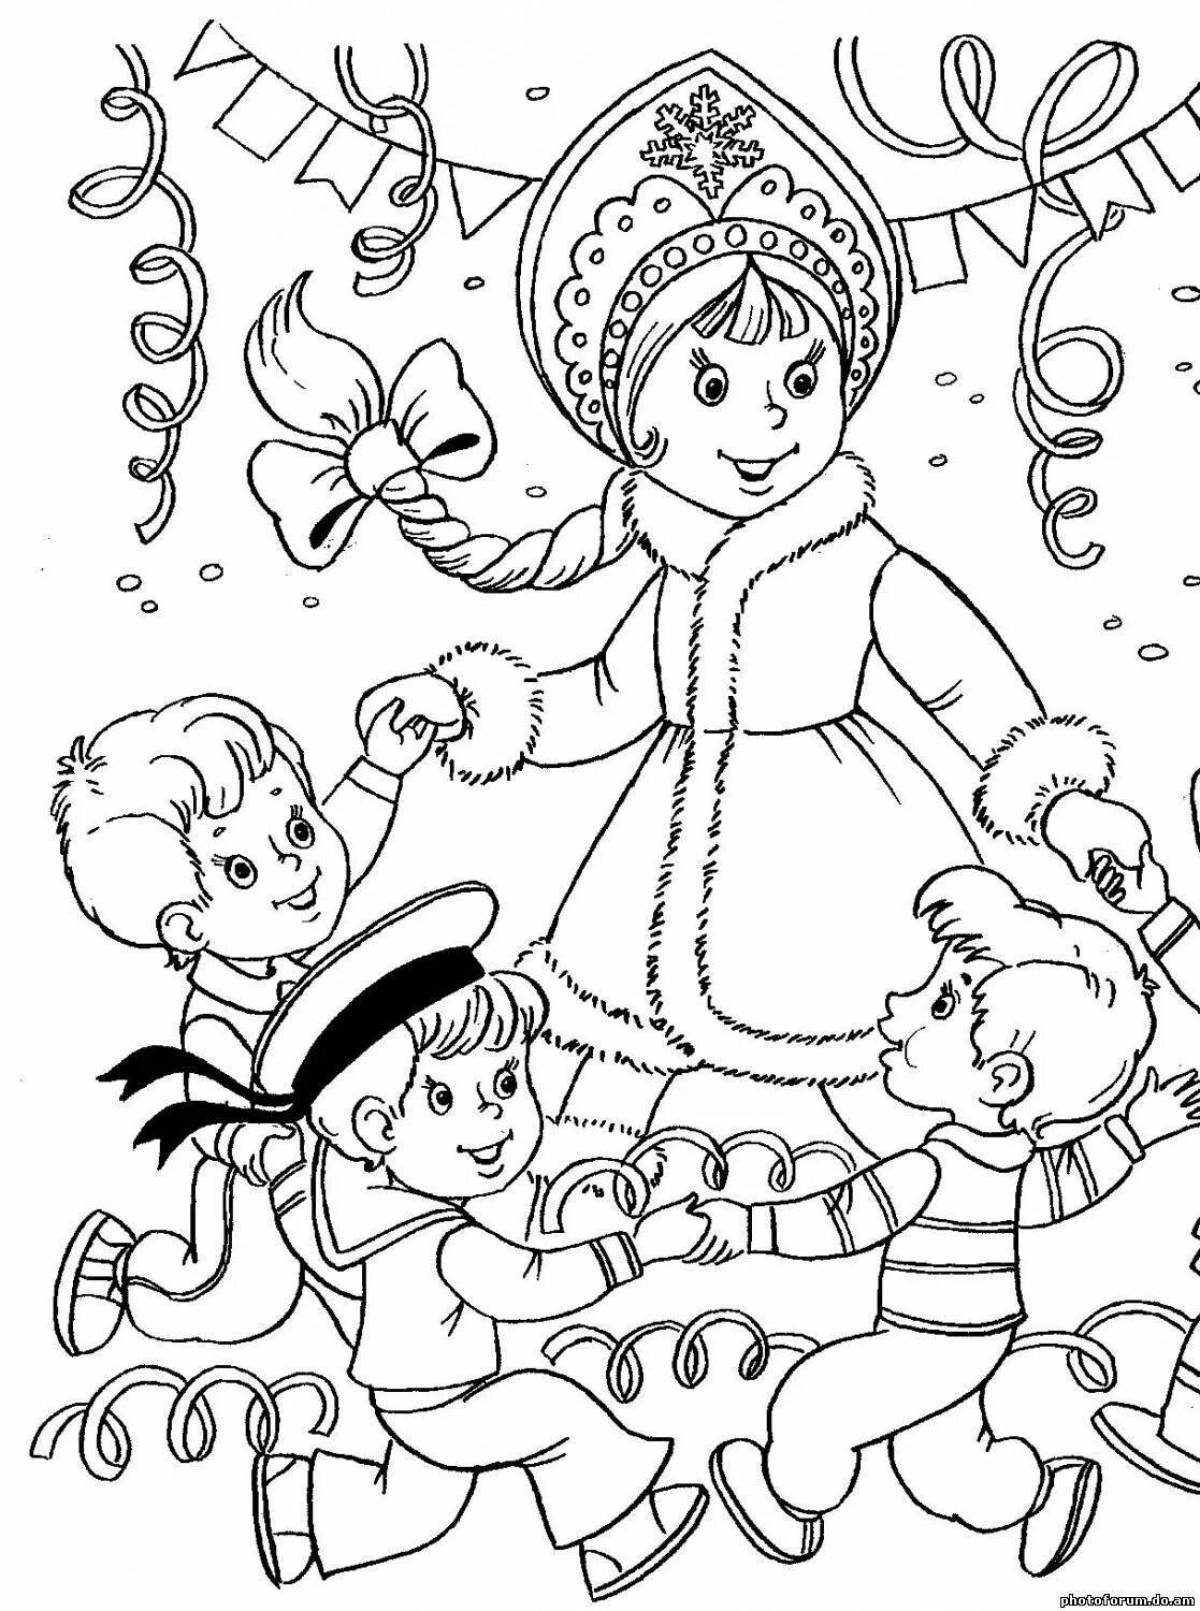 Snow Maiden's amazing coloring book